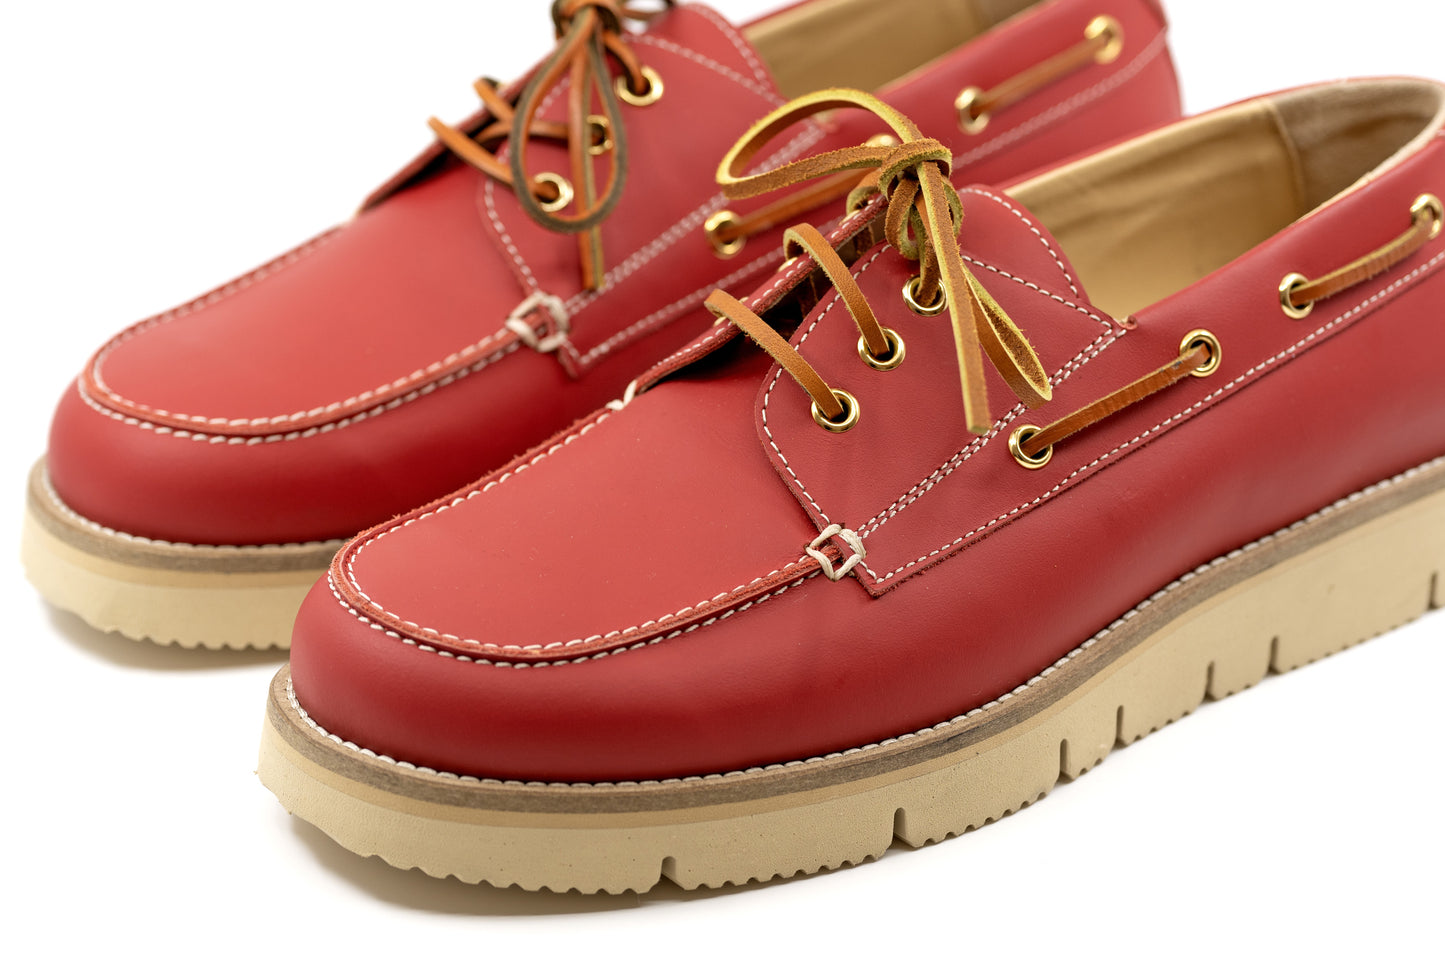 Hopkins Men's Boat Shoes - Red